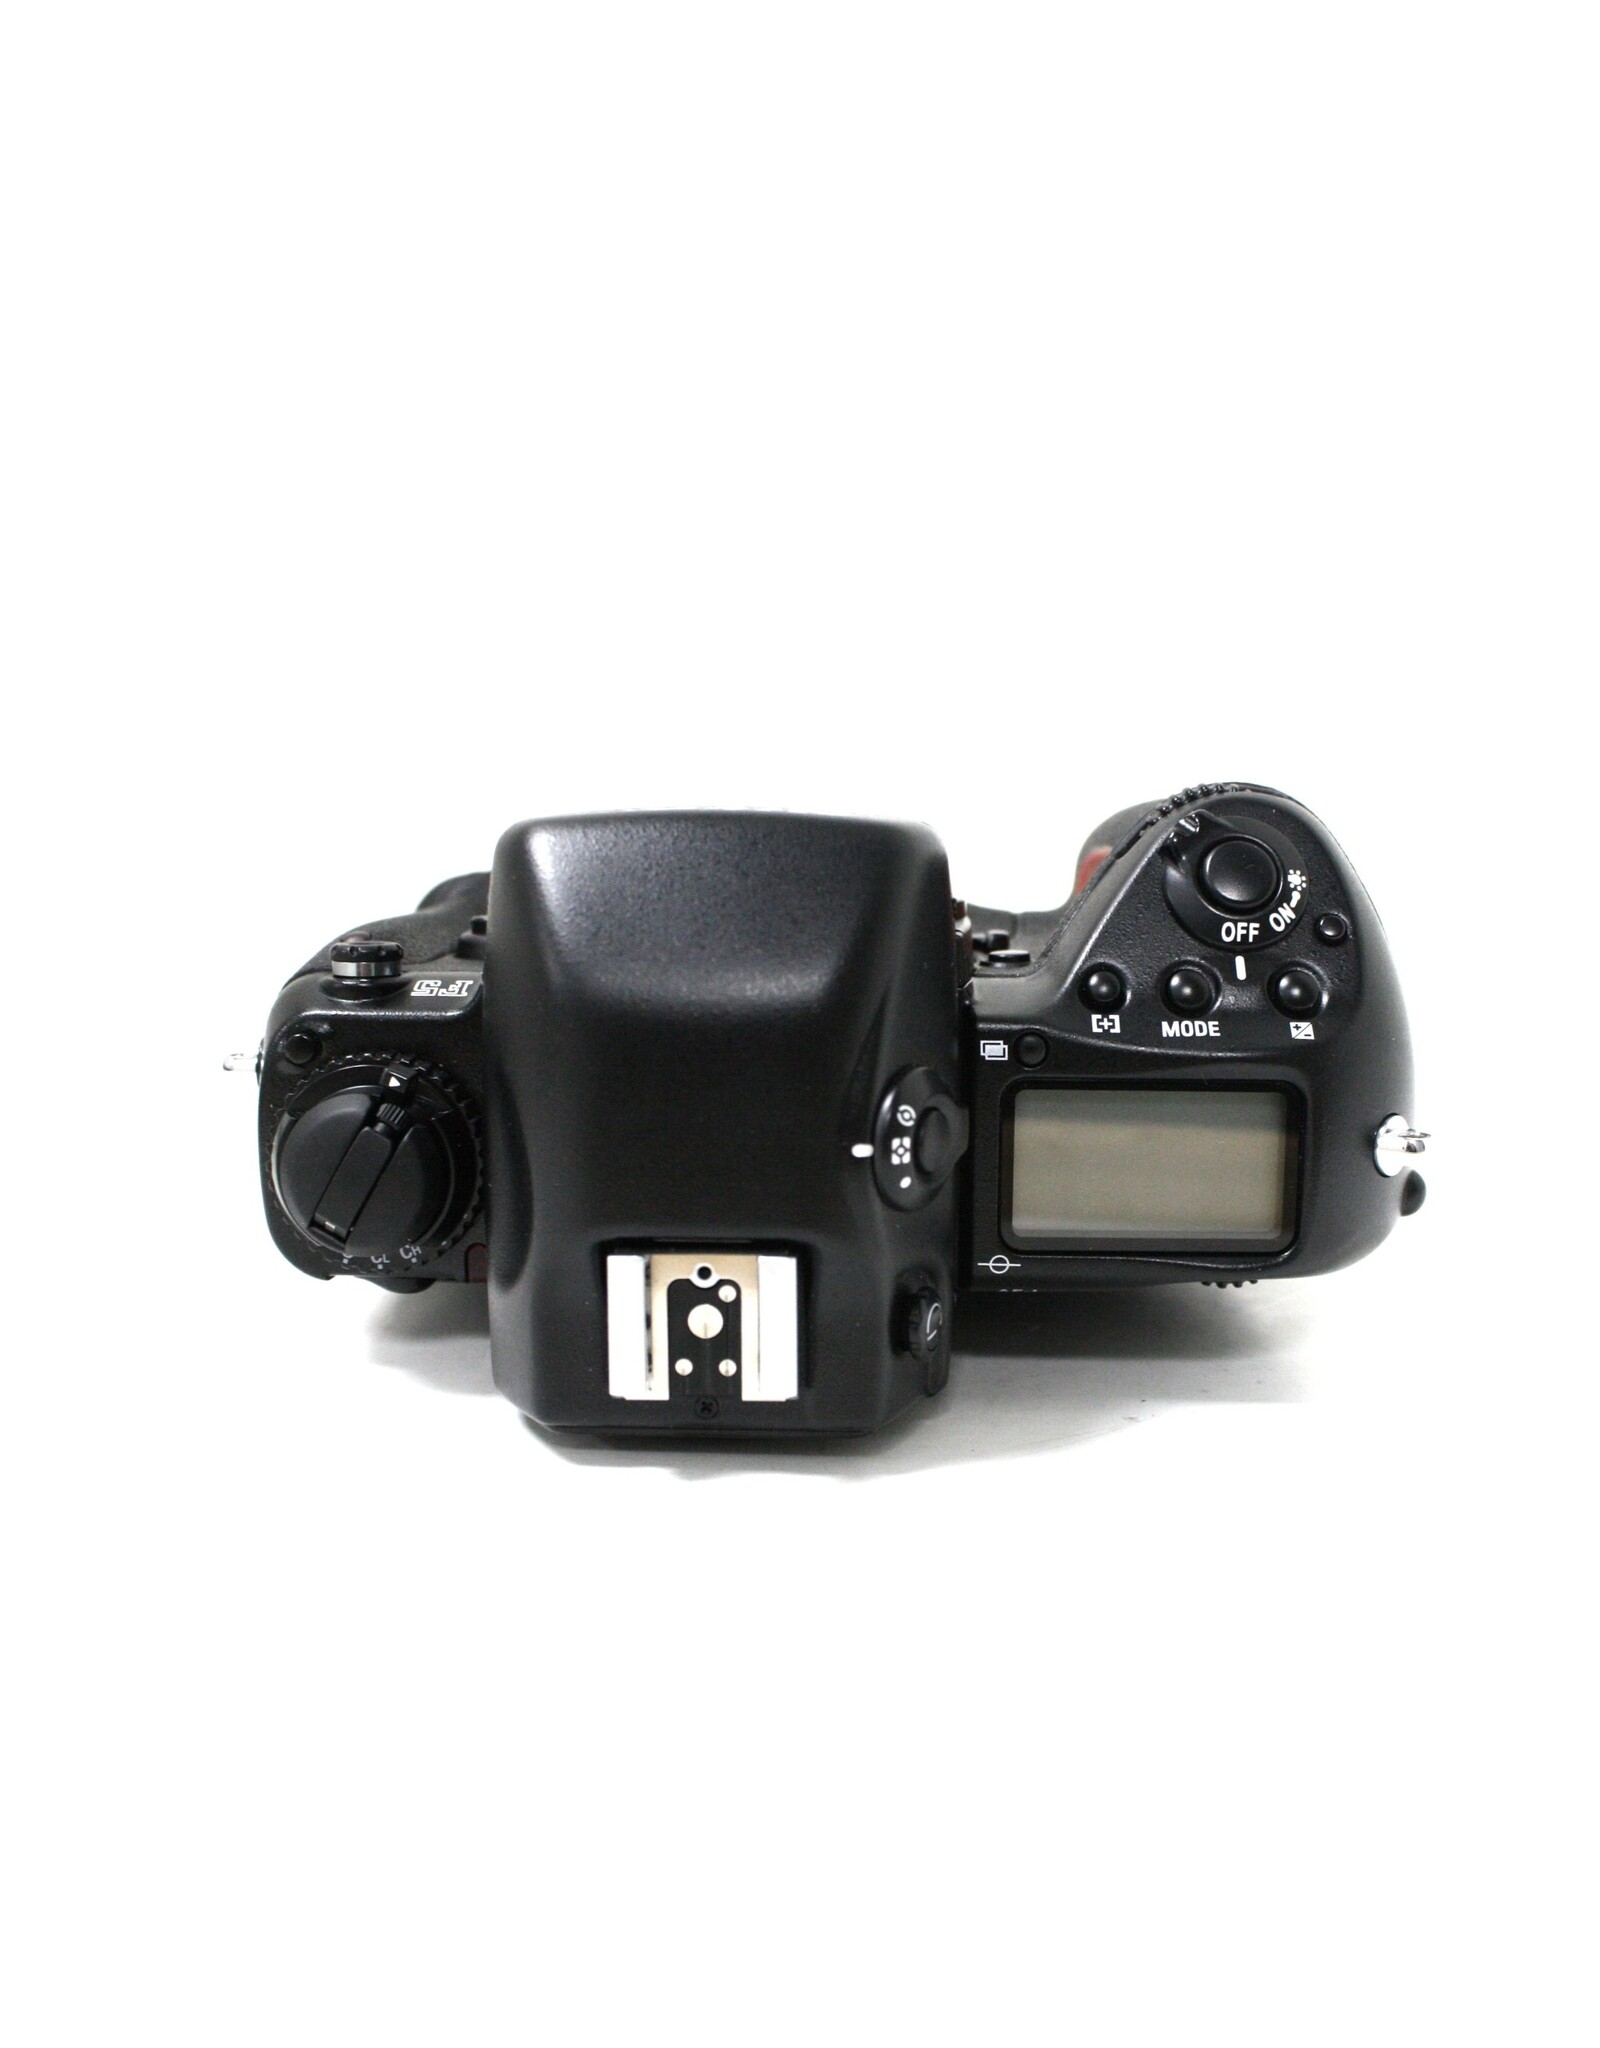 Nikon Nikon F5 35mm Film Camera Body From JAPAN [MINT in Box] (Pre-Owned)